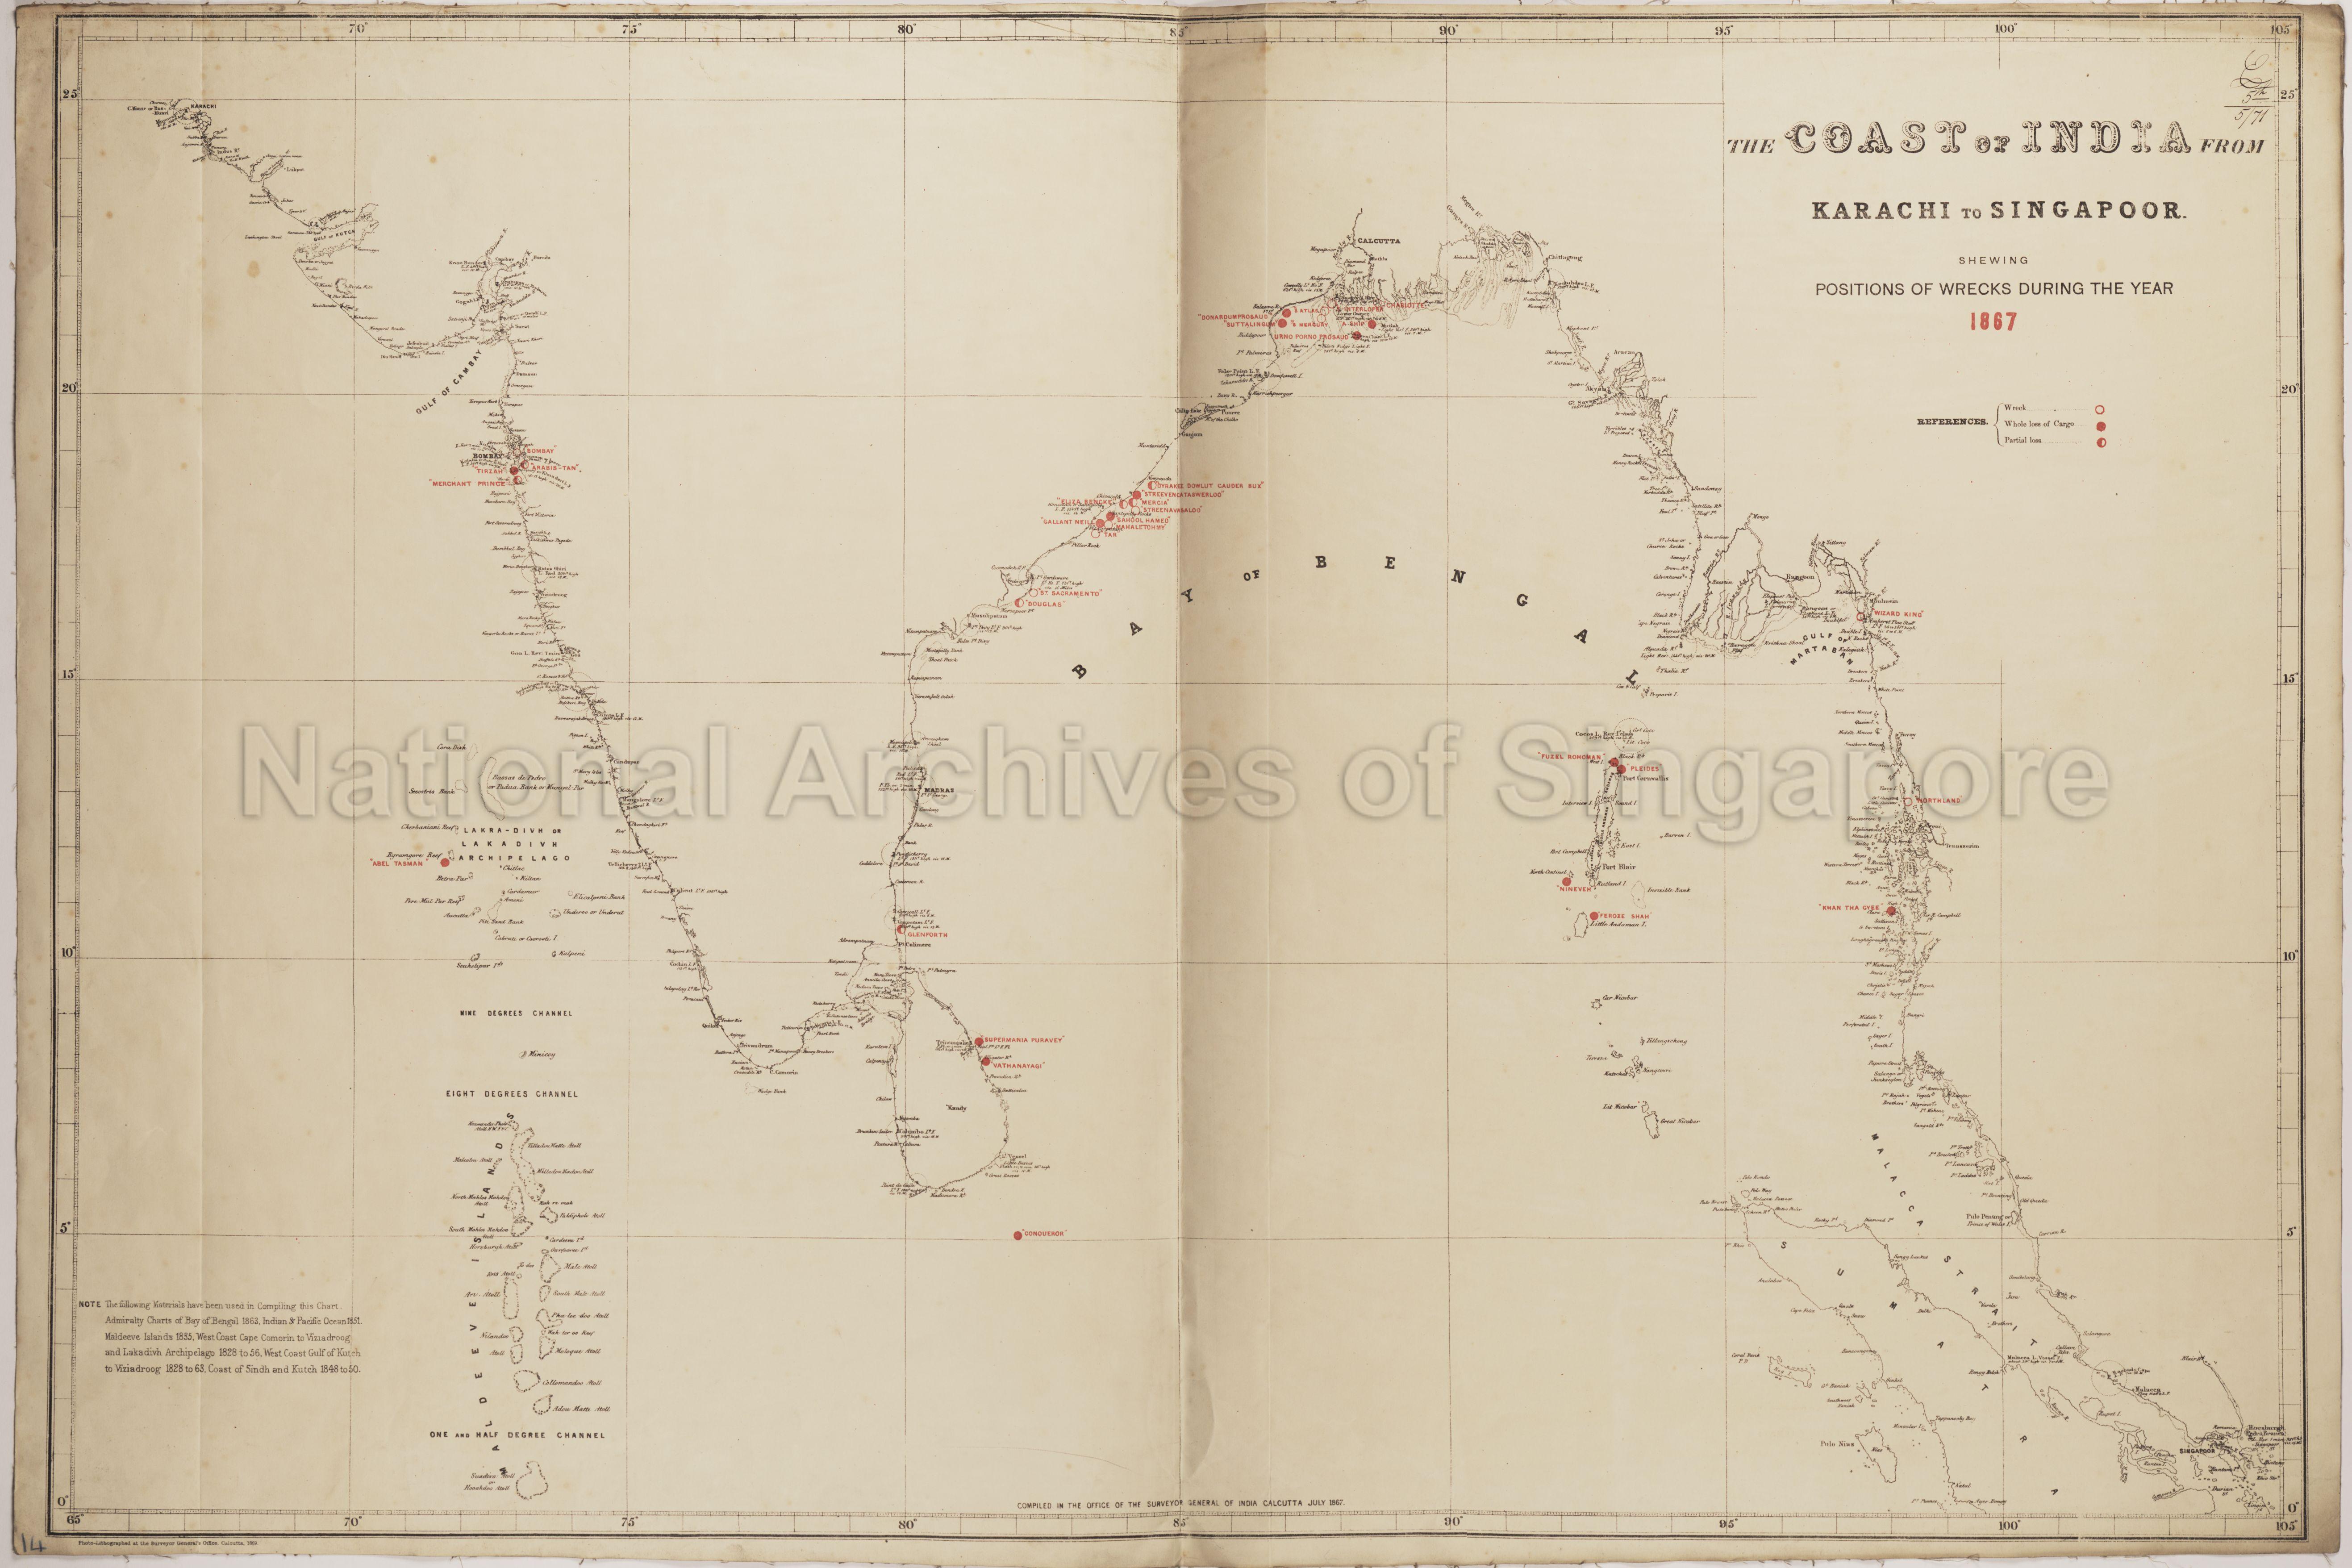 The Coast of India from Karachi to Singapoor (Singapore)  …